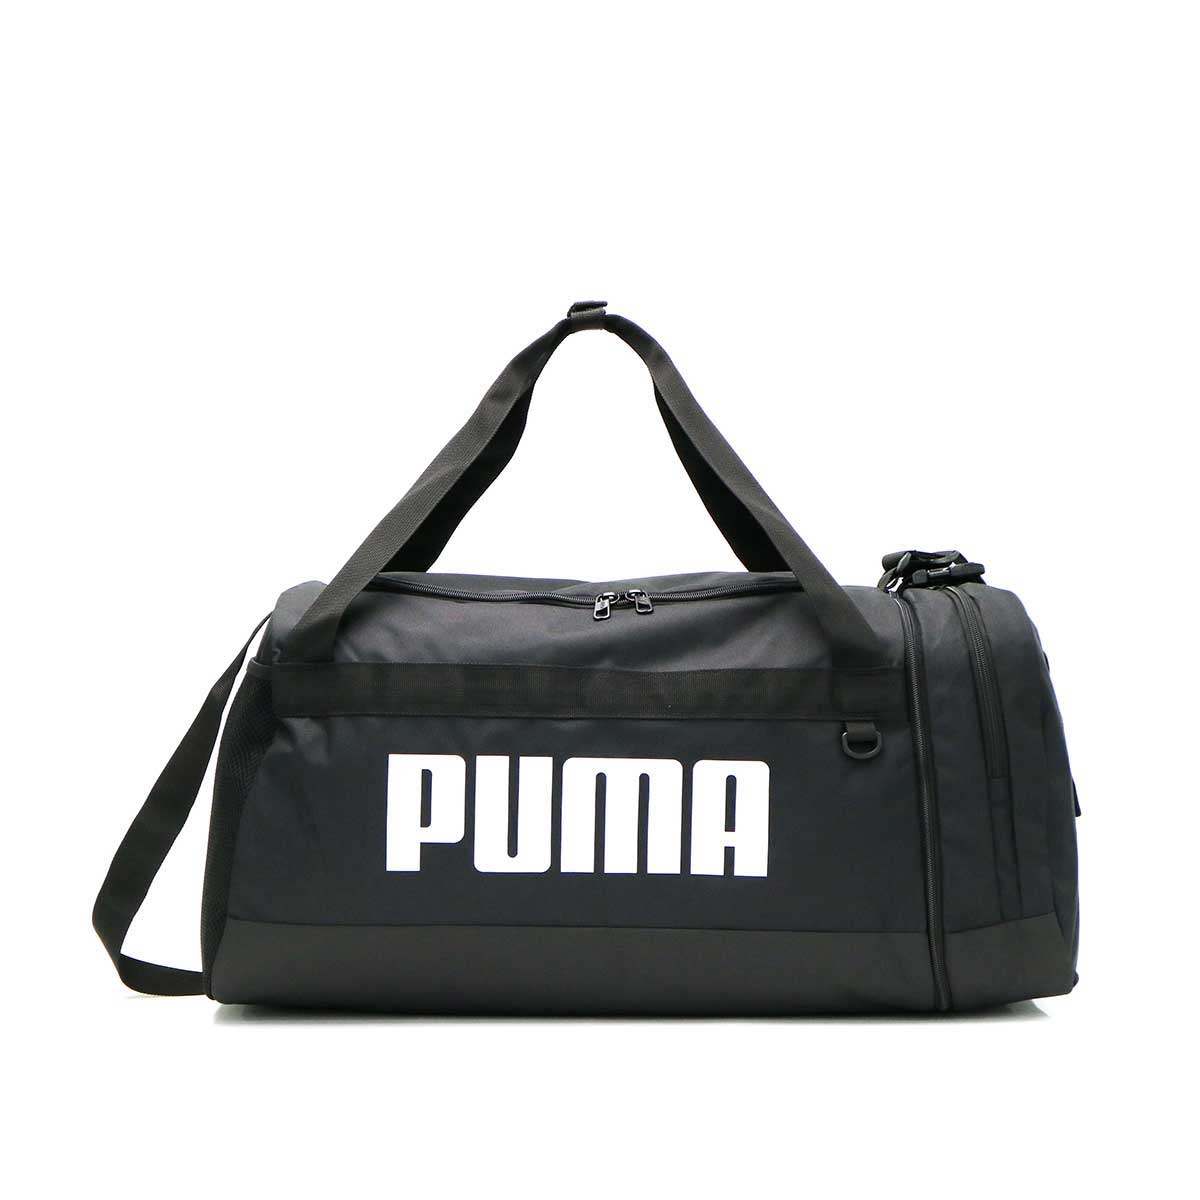 Puma プーマ チャレンジャー ダッフルバッグm Pro 58l 正規販売店 カバン 小物の専門店のギャレリアモール